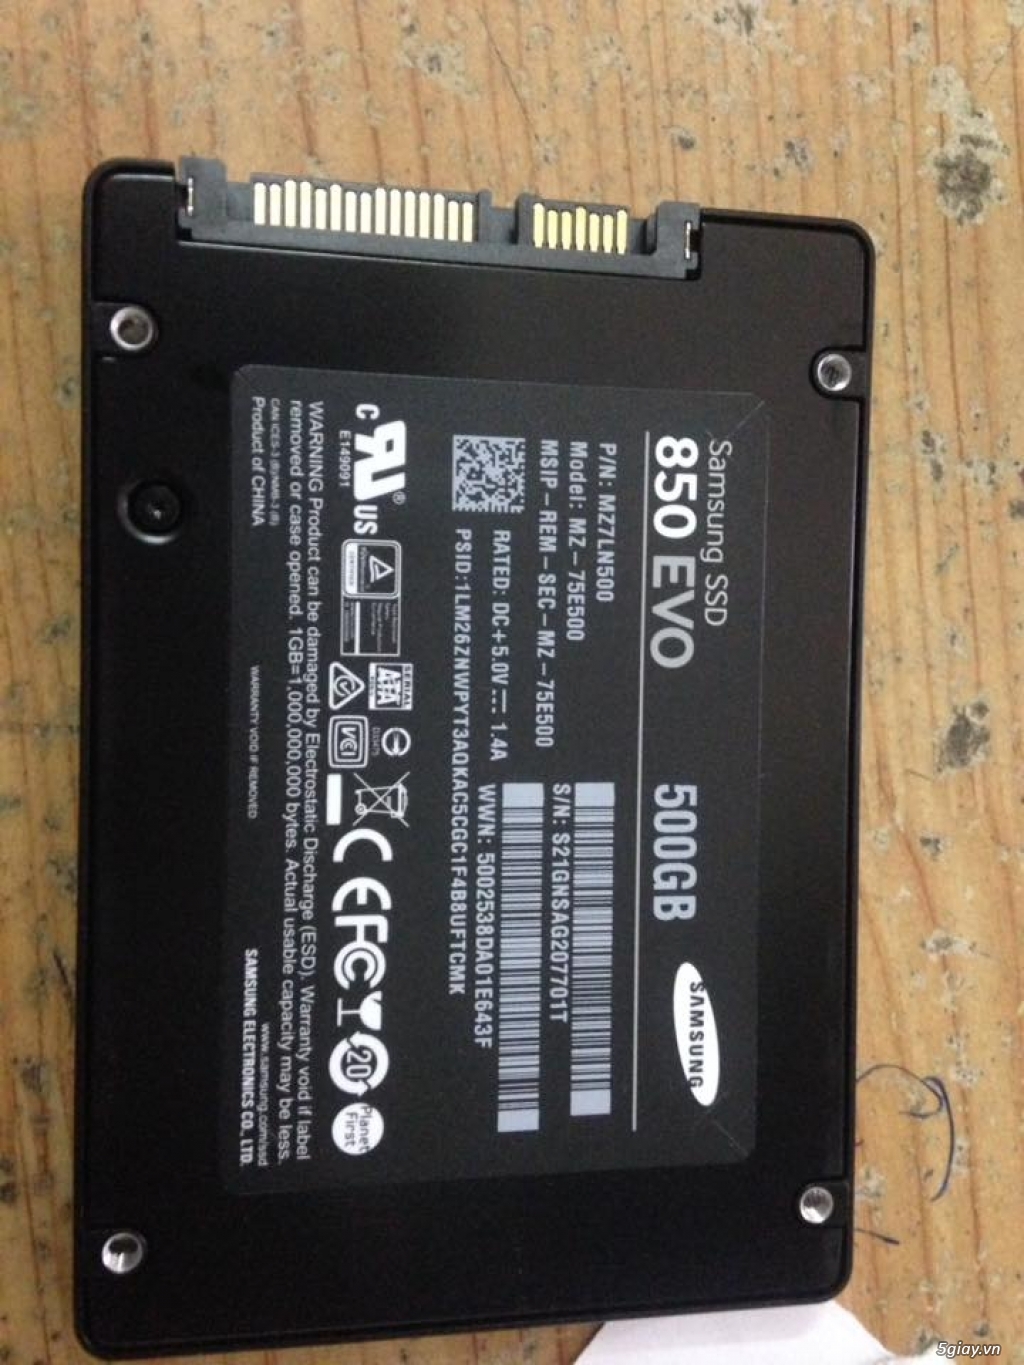 Bán cặp ram DDR4 8G Kingston ECC và 1 SSD Samsung 500G Evo 850 SataIII - 2